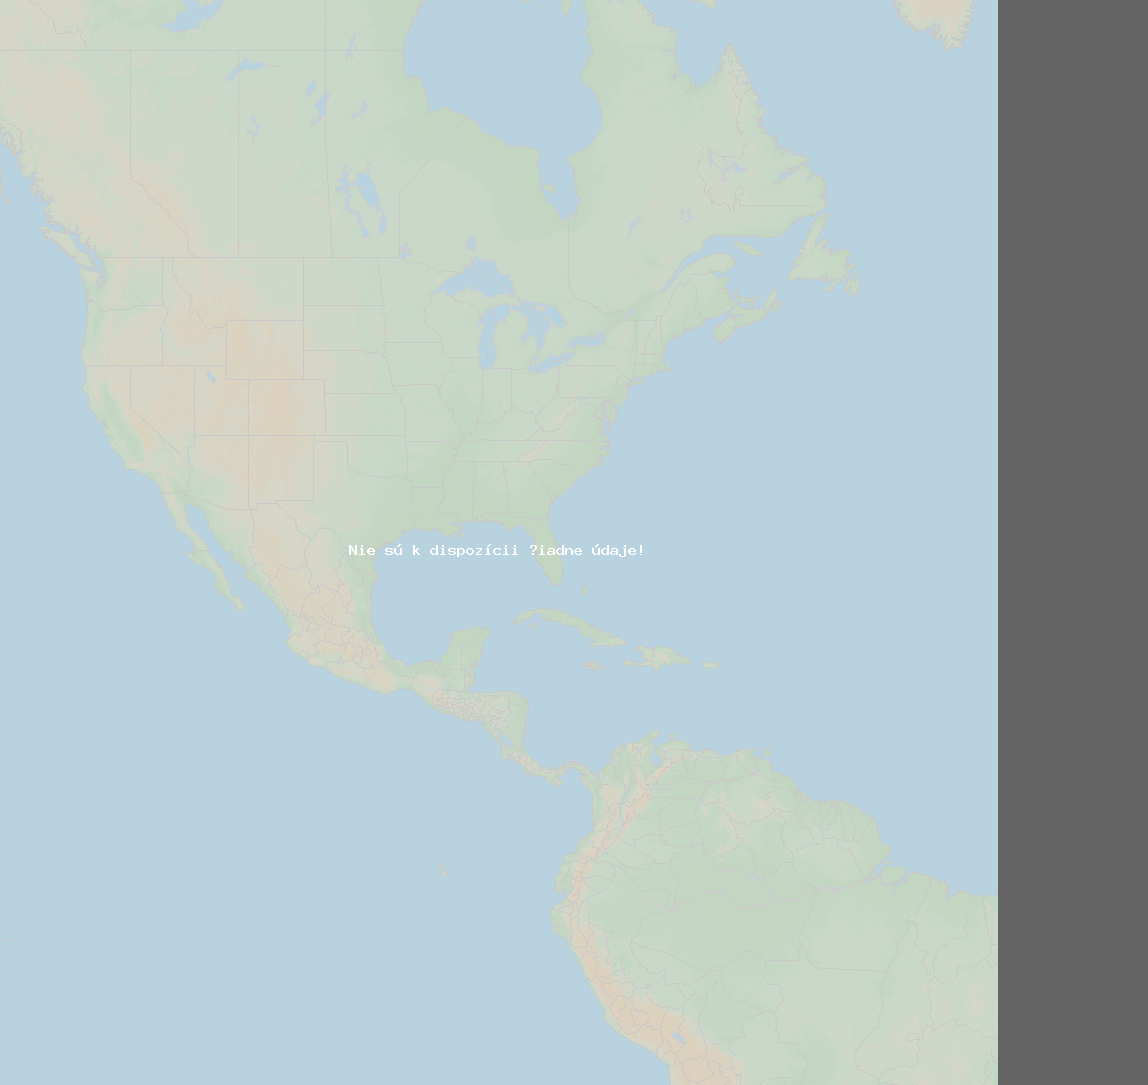 Pomer bleskov (Stanica Haleakala) North America 2020 November